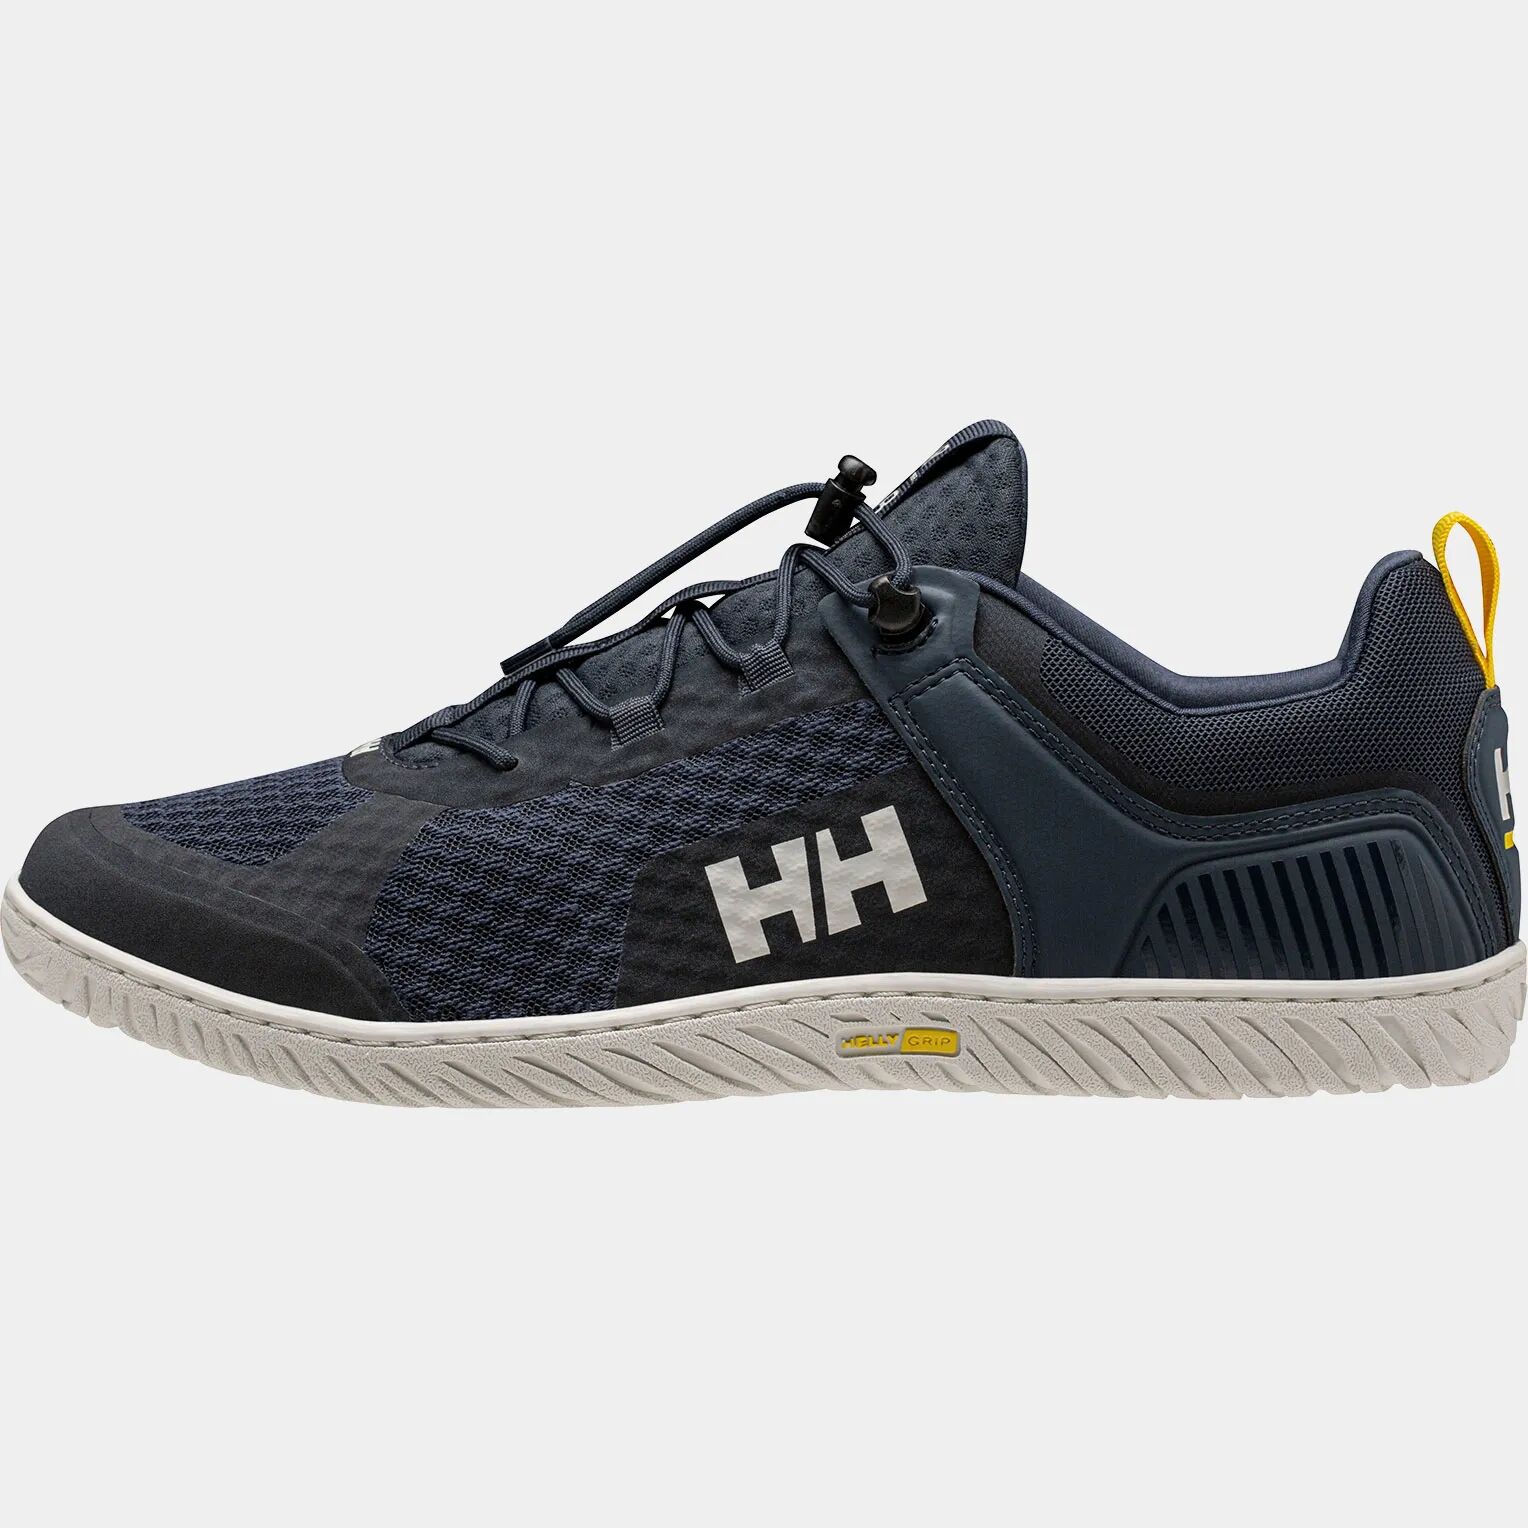 Helly Hansen Men's HP Foil V2 Sailing Shoes Navy 7